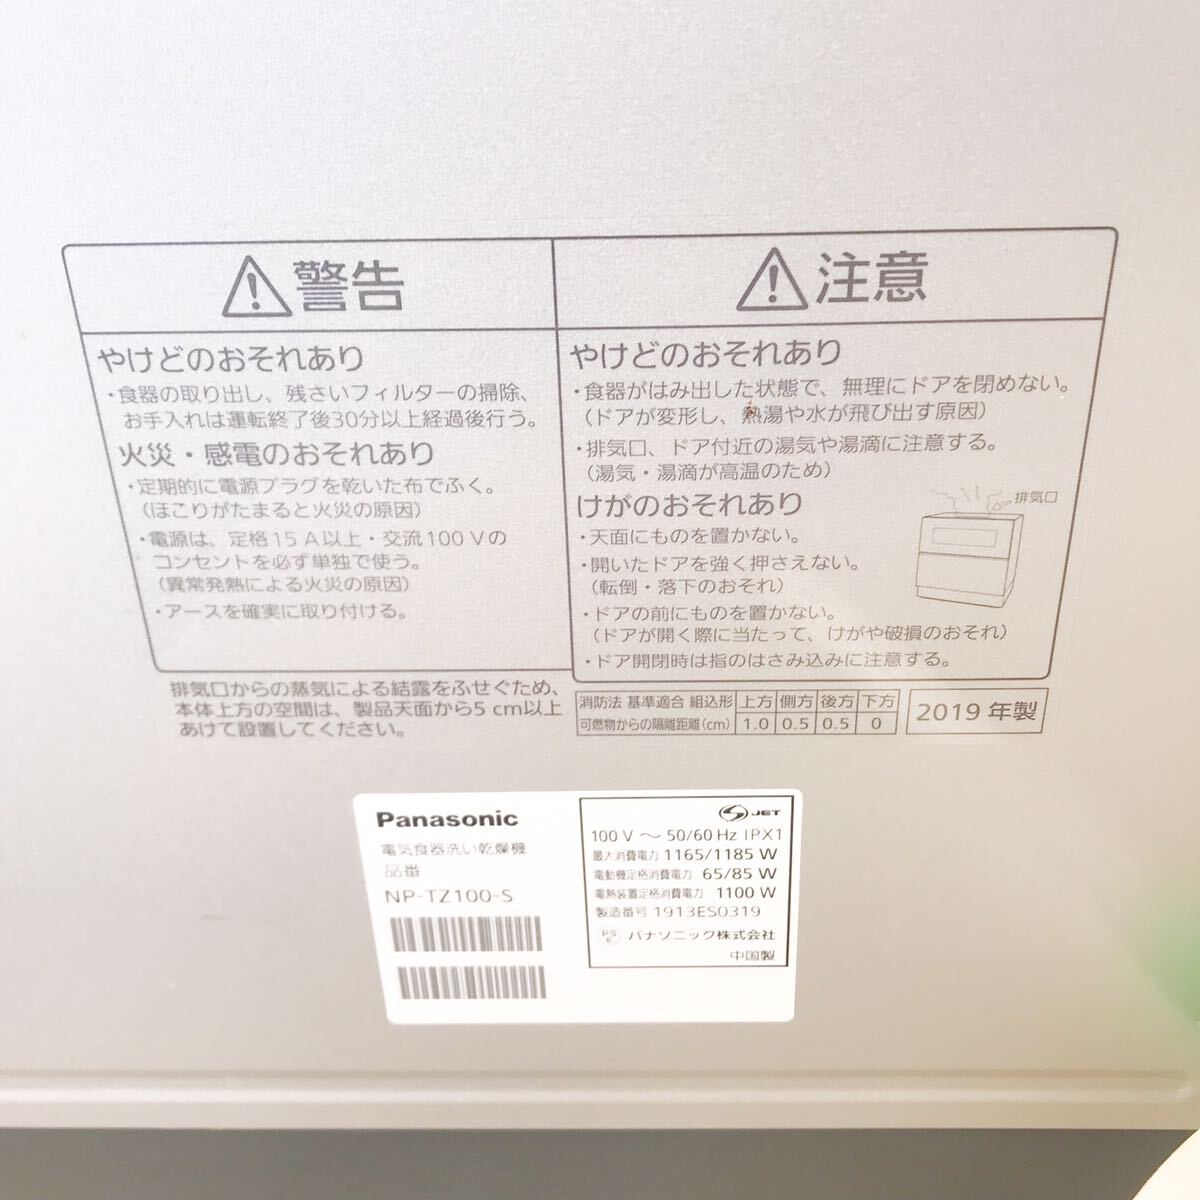 [*Panasonic*] Panasonic # electric dishwashing and drying machine #NP-TZ100-S#2018 year made # dishwasher dish washer operation verification ending household goods flight .. shipping 